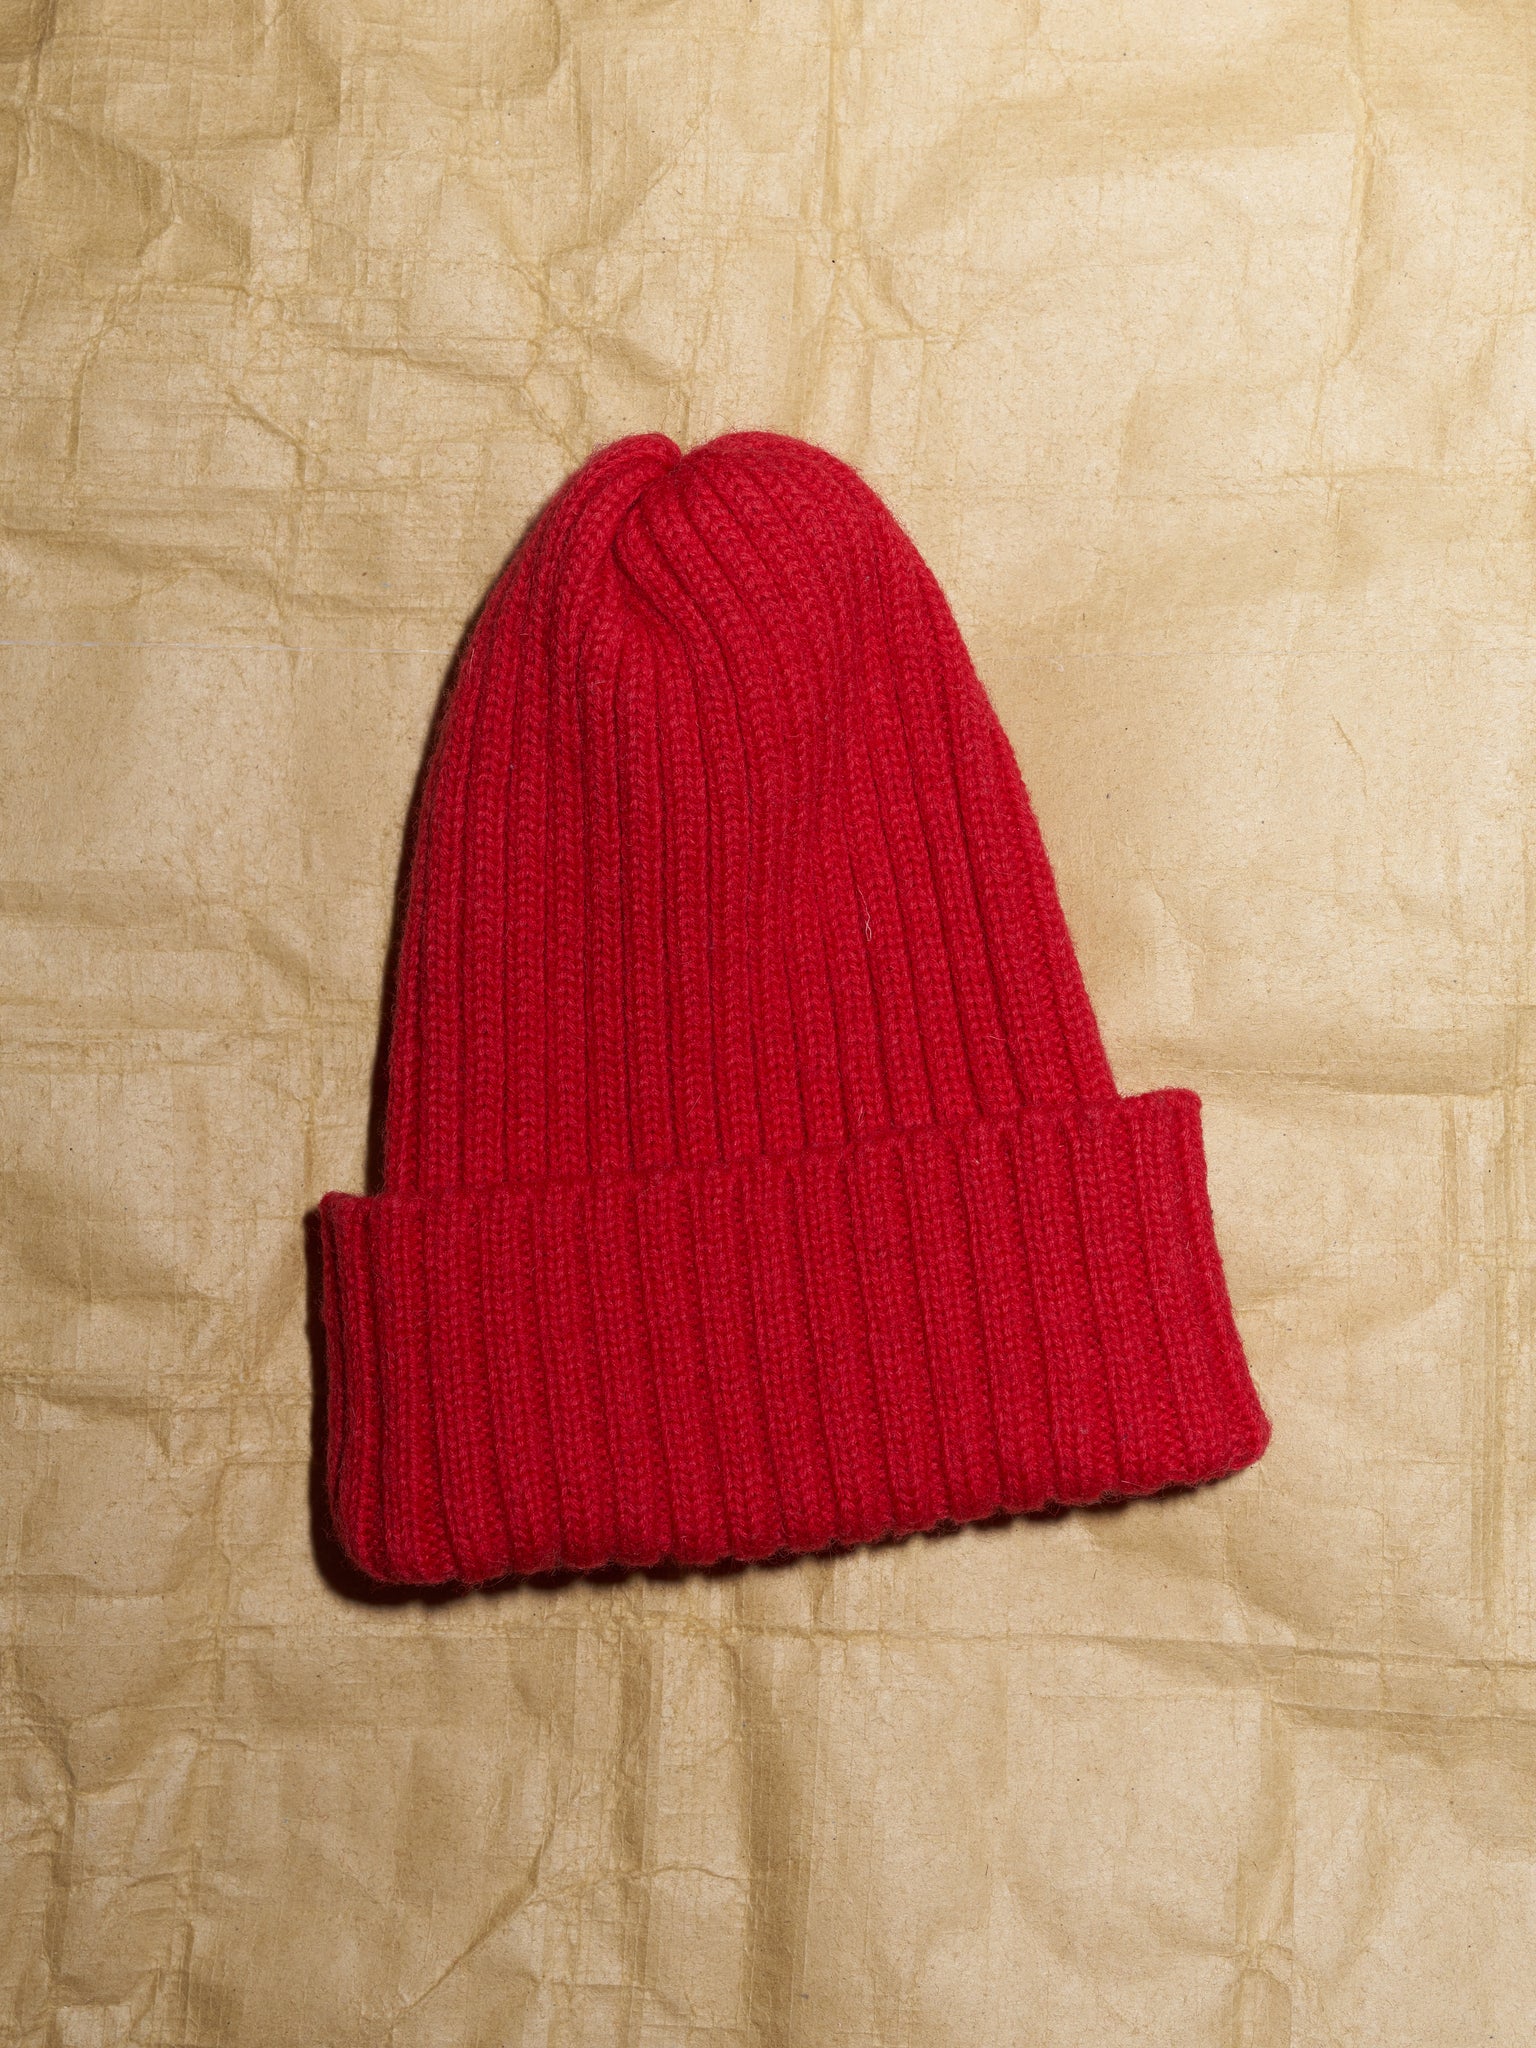 Peter Storm 1997 red W1 proofed wool rib knit waterproof beanie